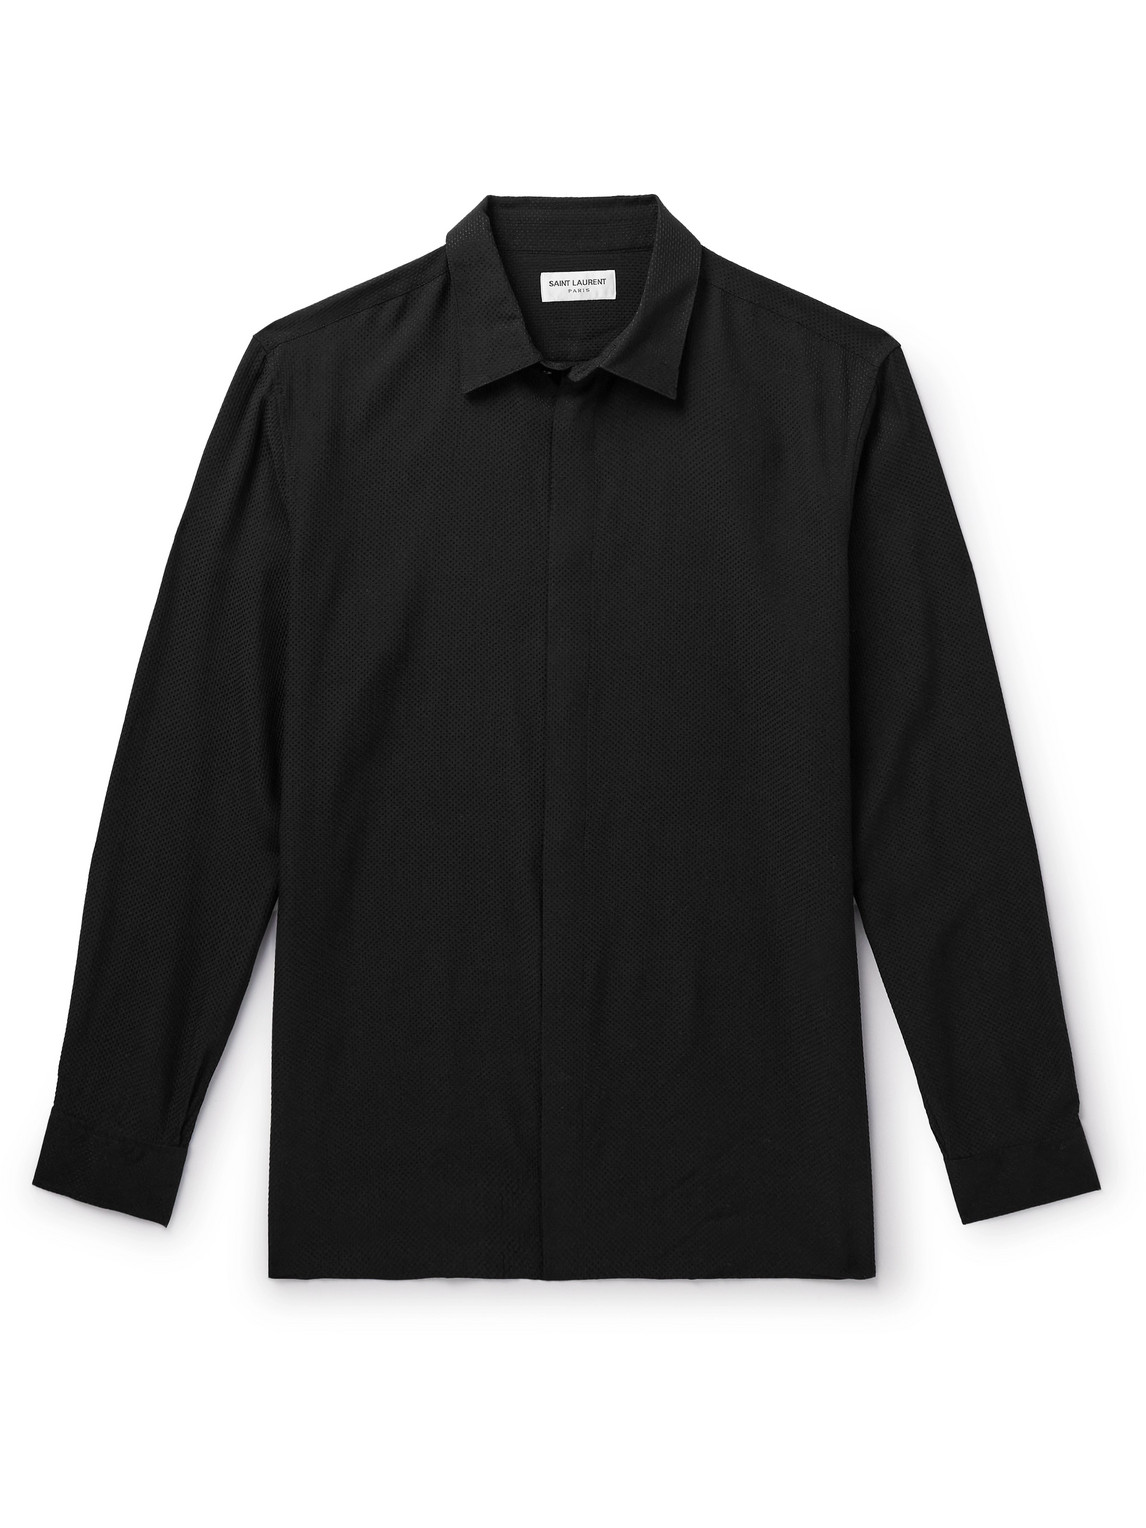 Saint Laurent Polka-dot Jacquard Shirt In Black